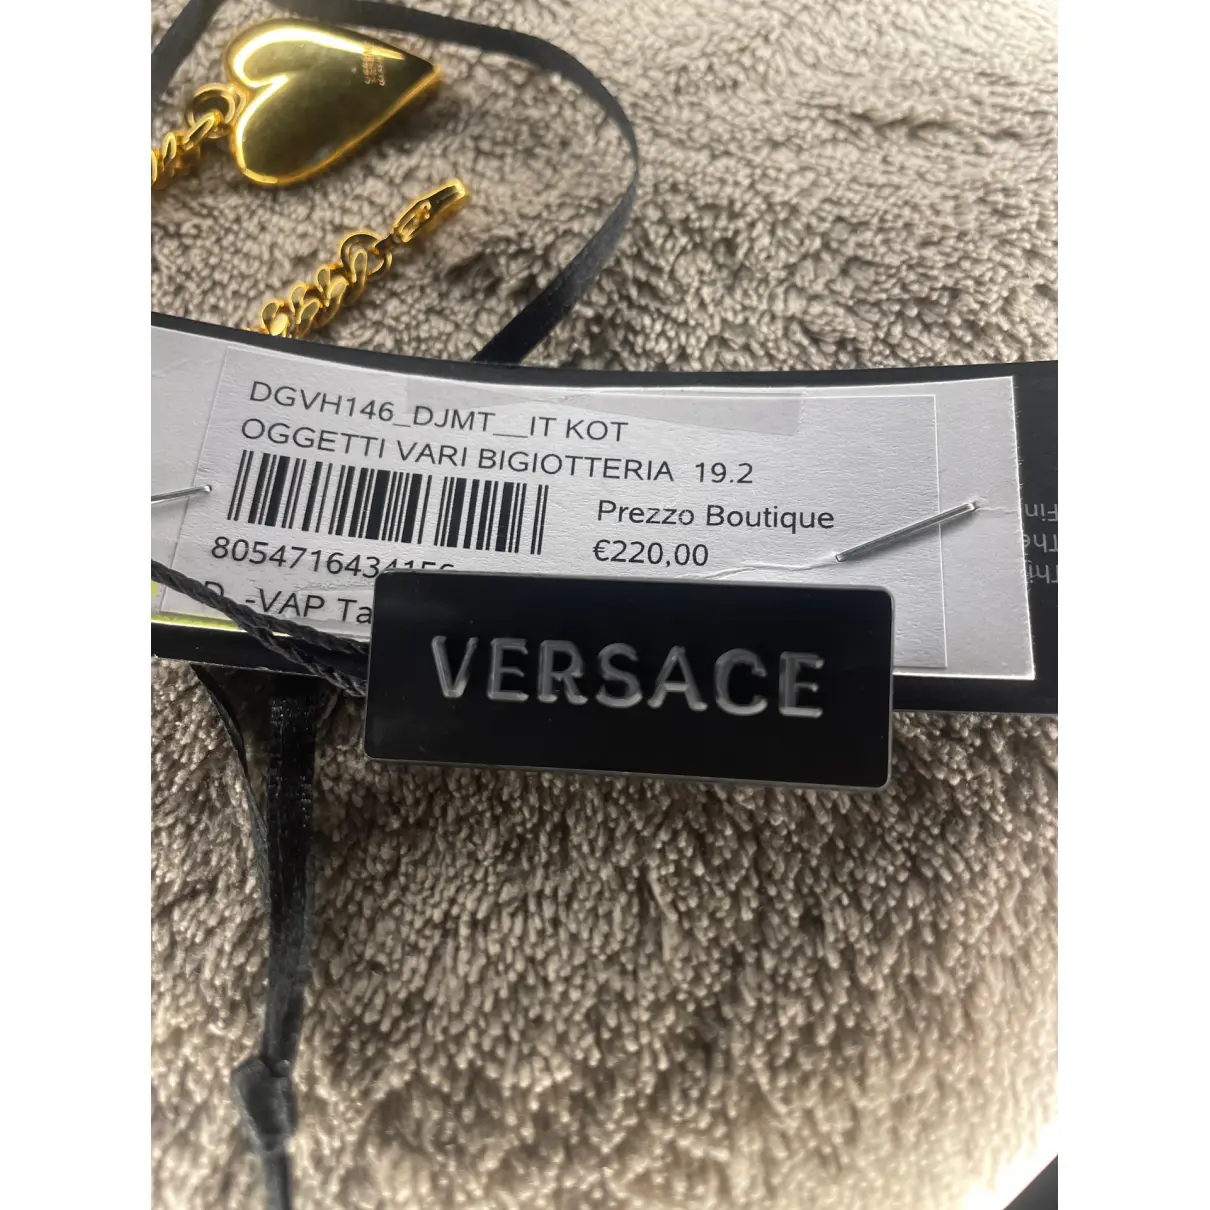 Bracelet Versace